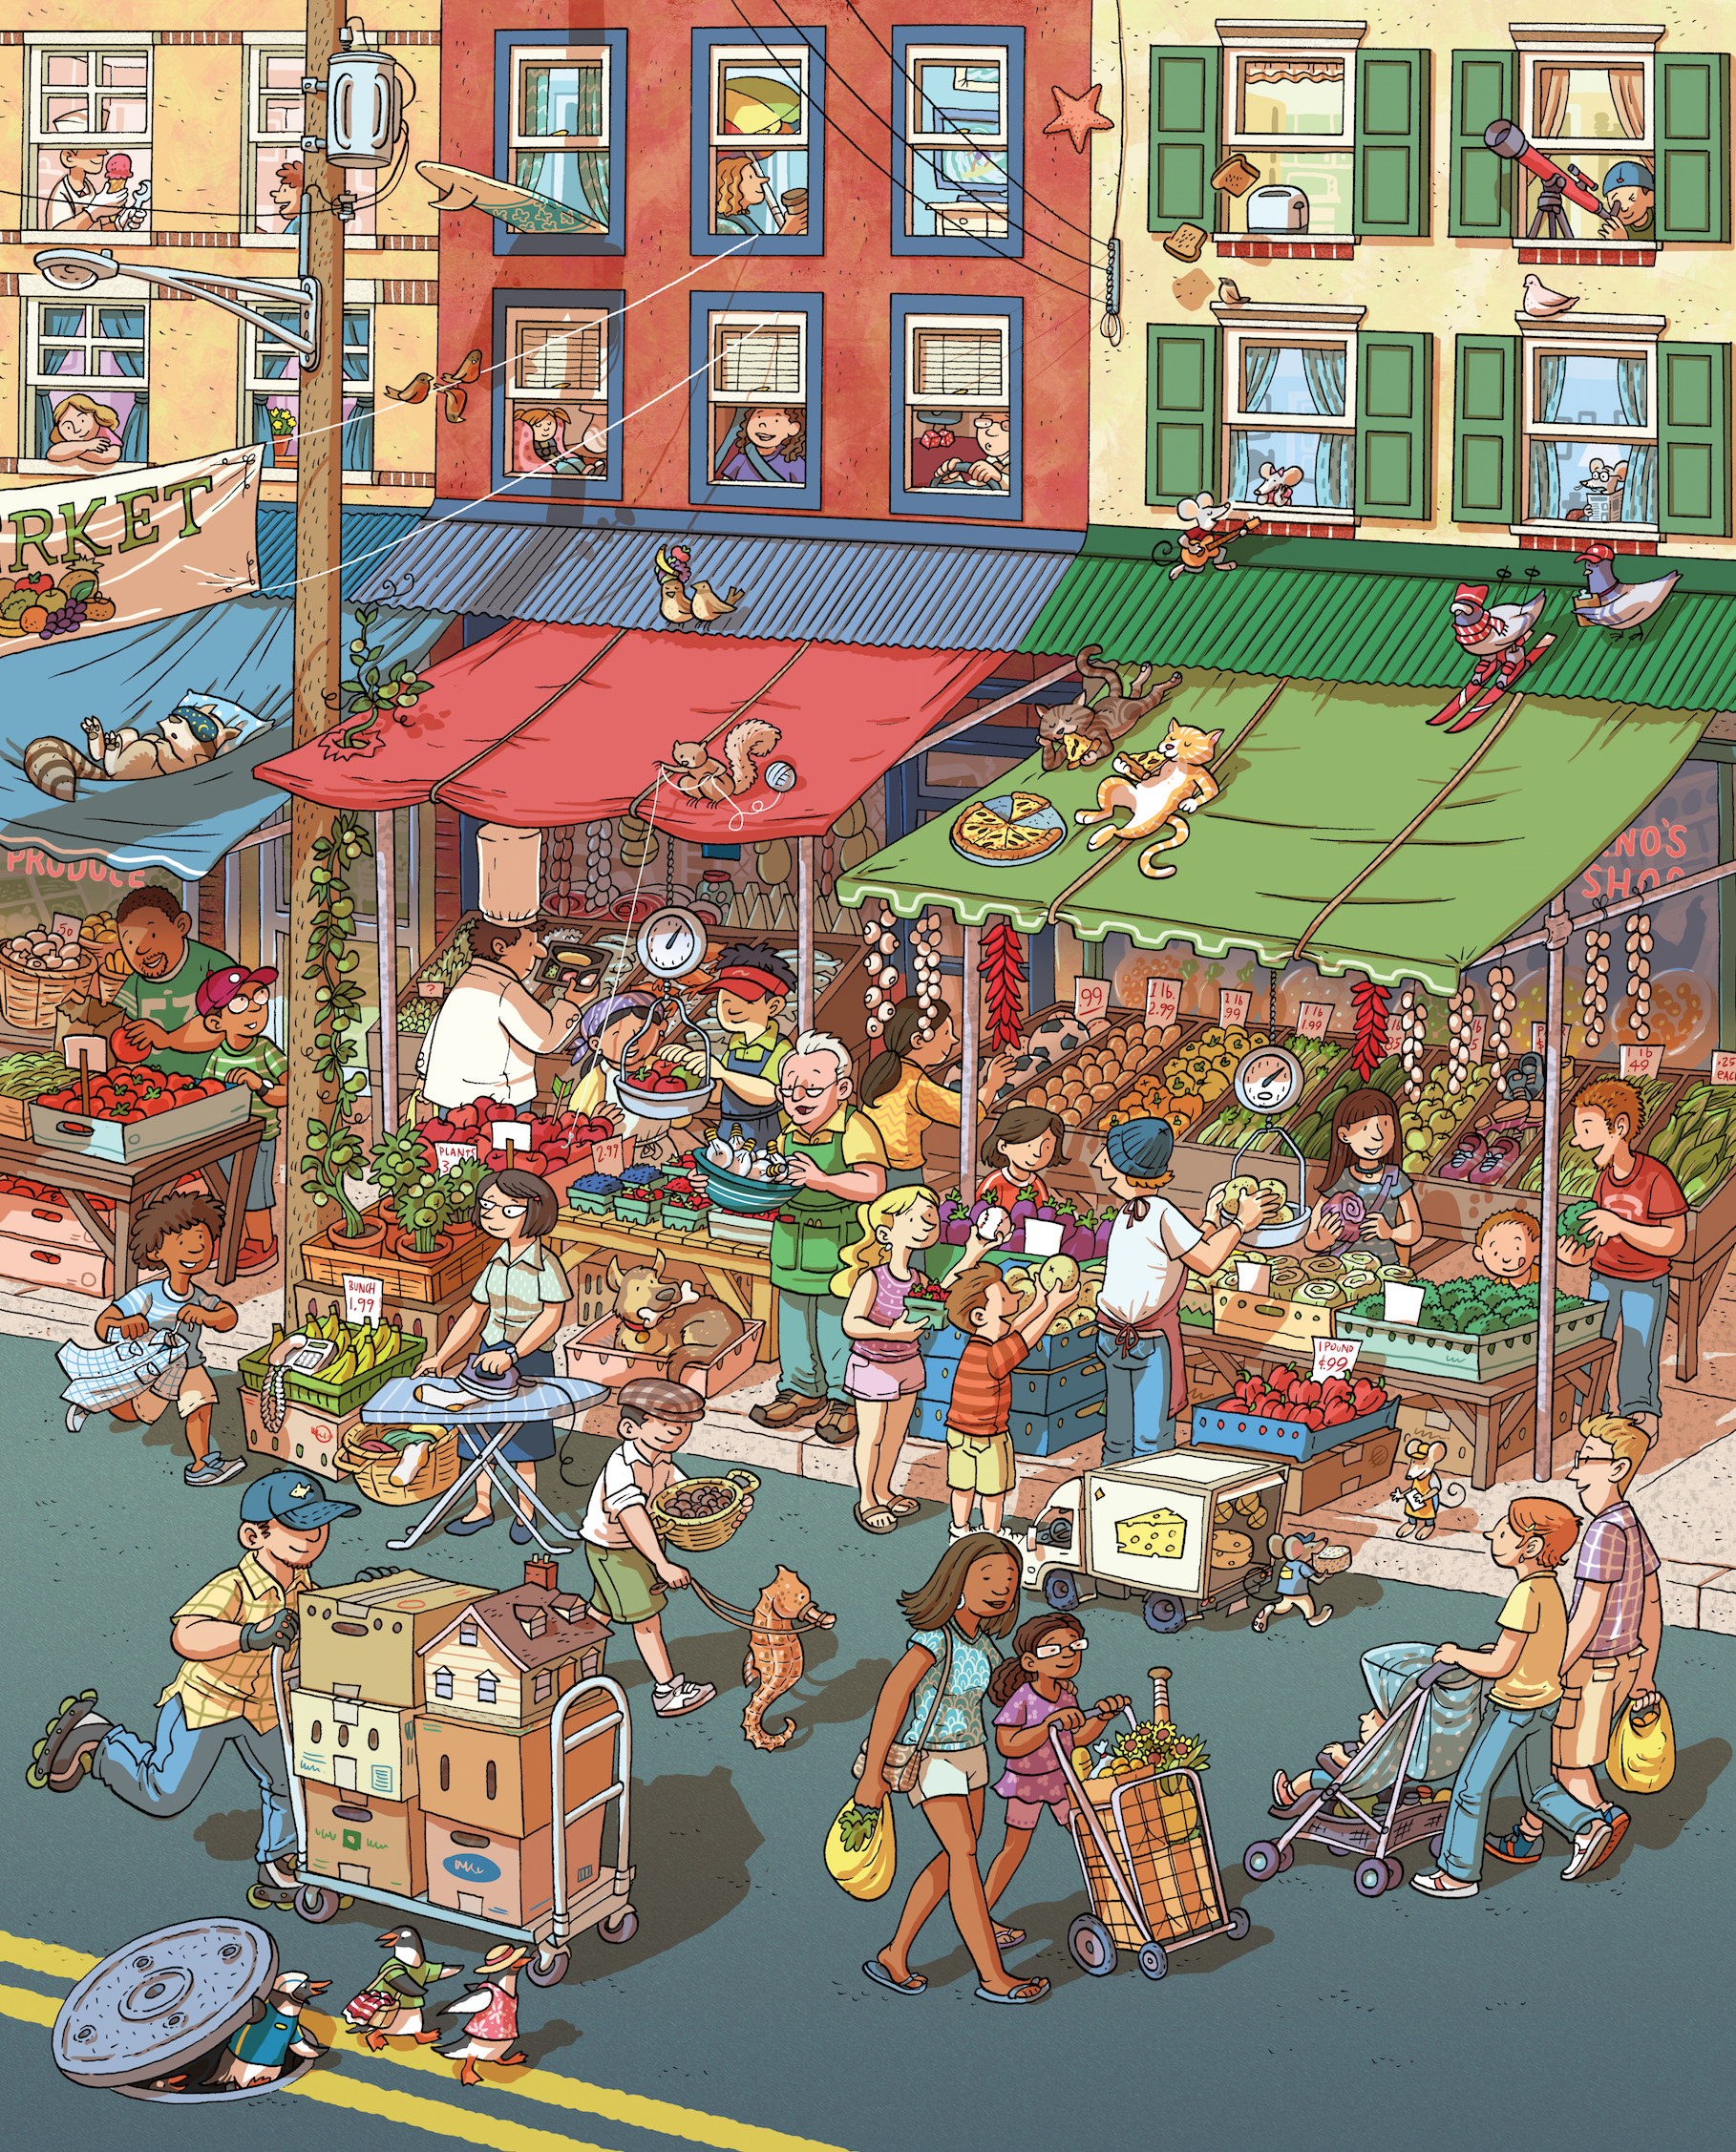 Picture of a street scene. Рынок иллюстрация. Мультяшный город и рынок. Рынок рисунок. Базар иллюстрация.